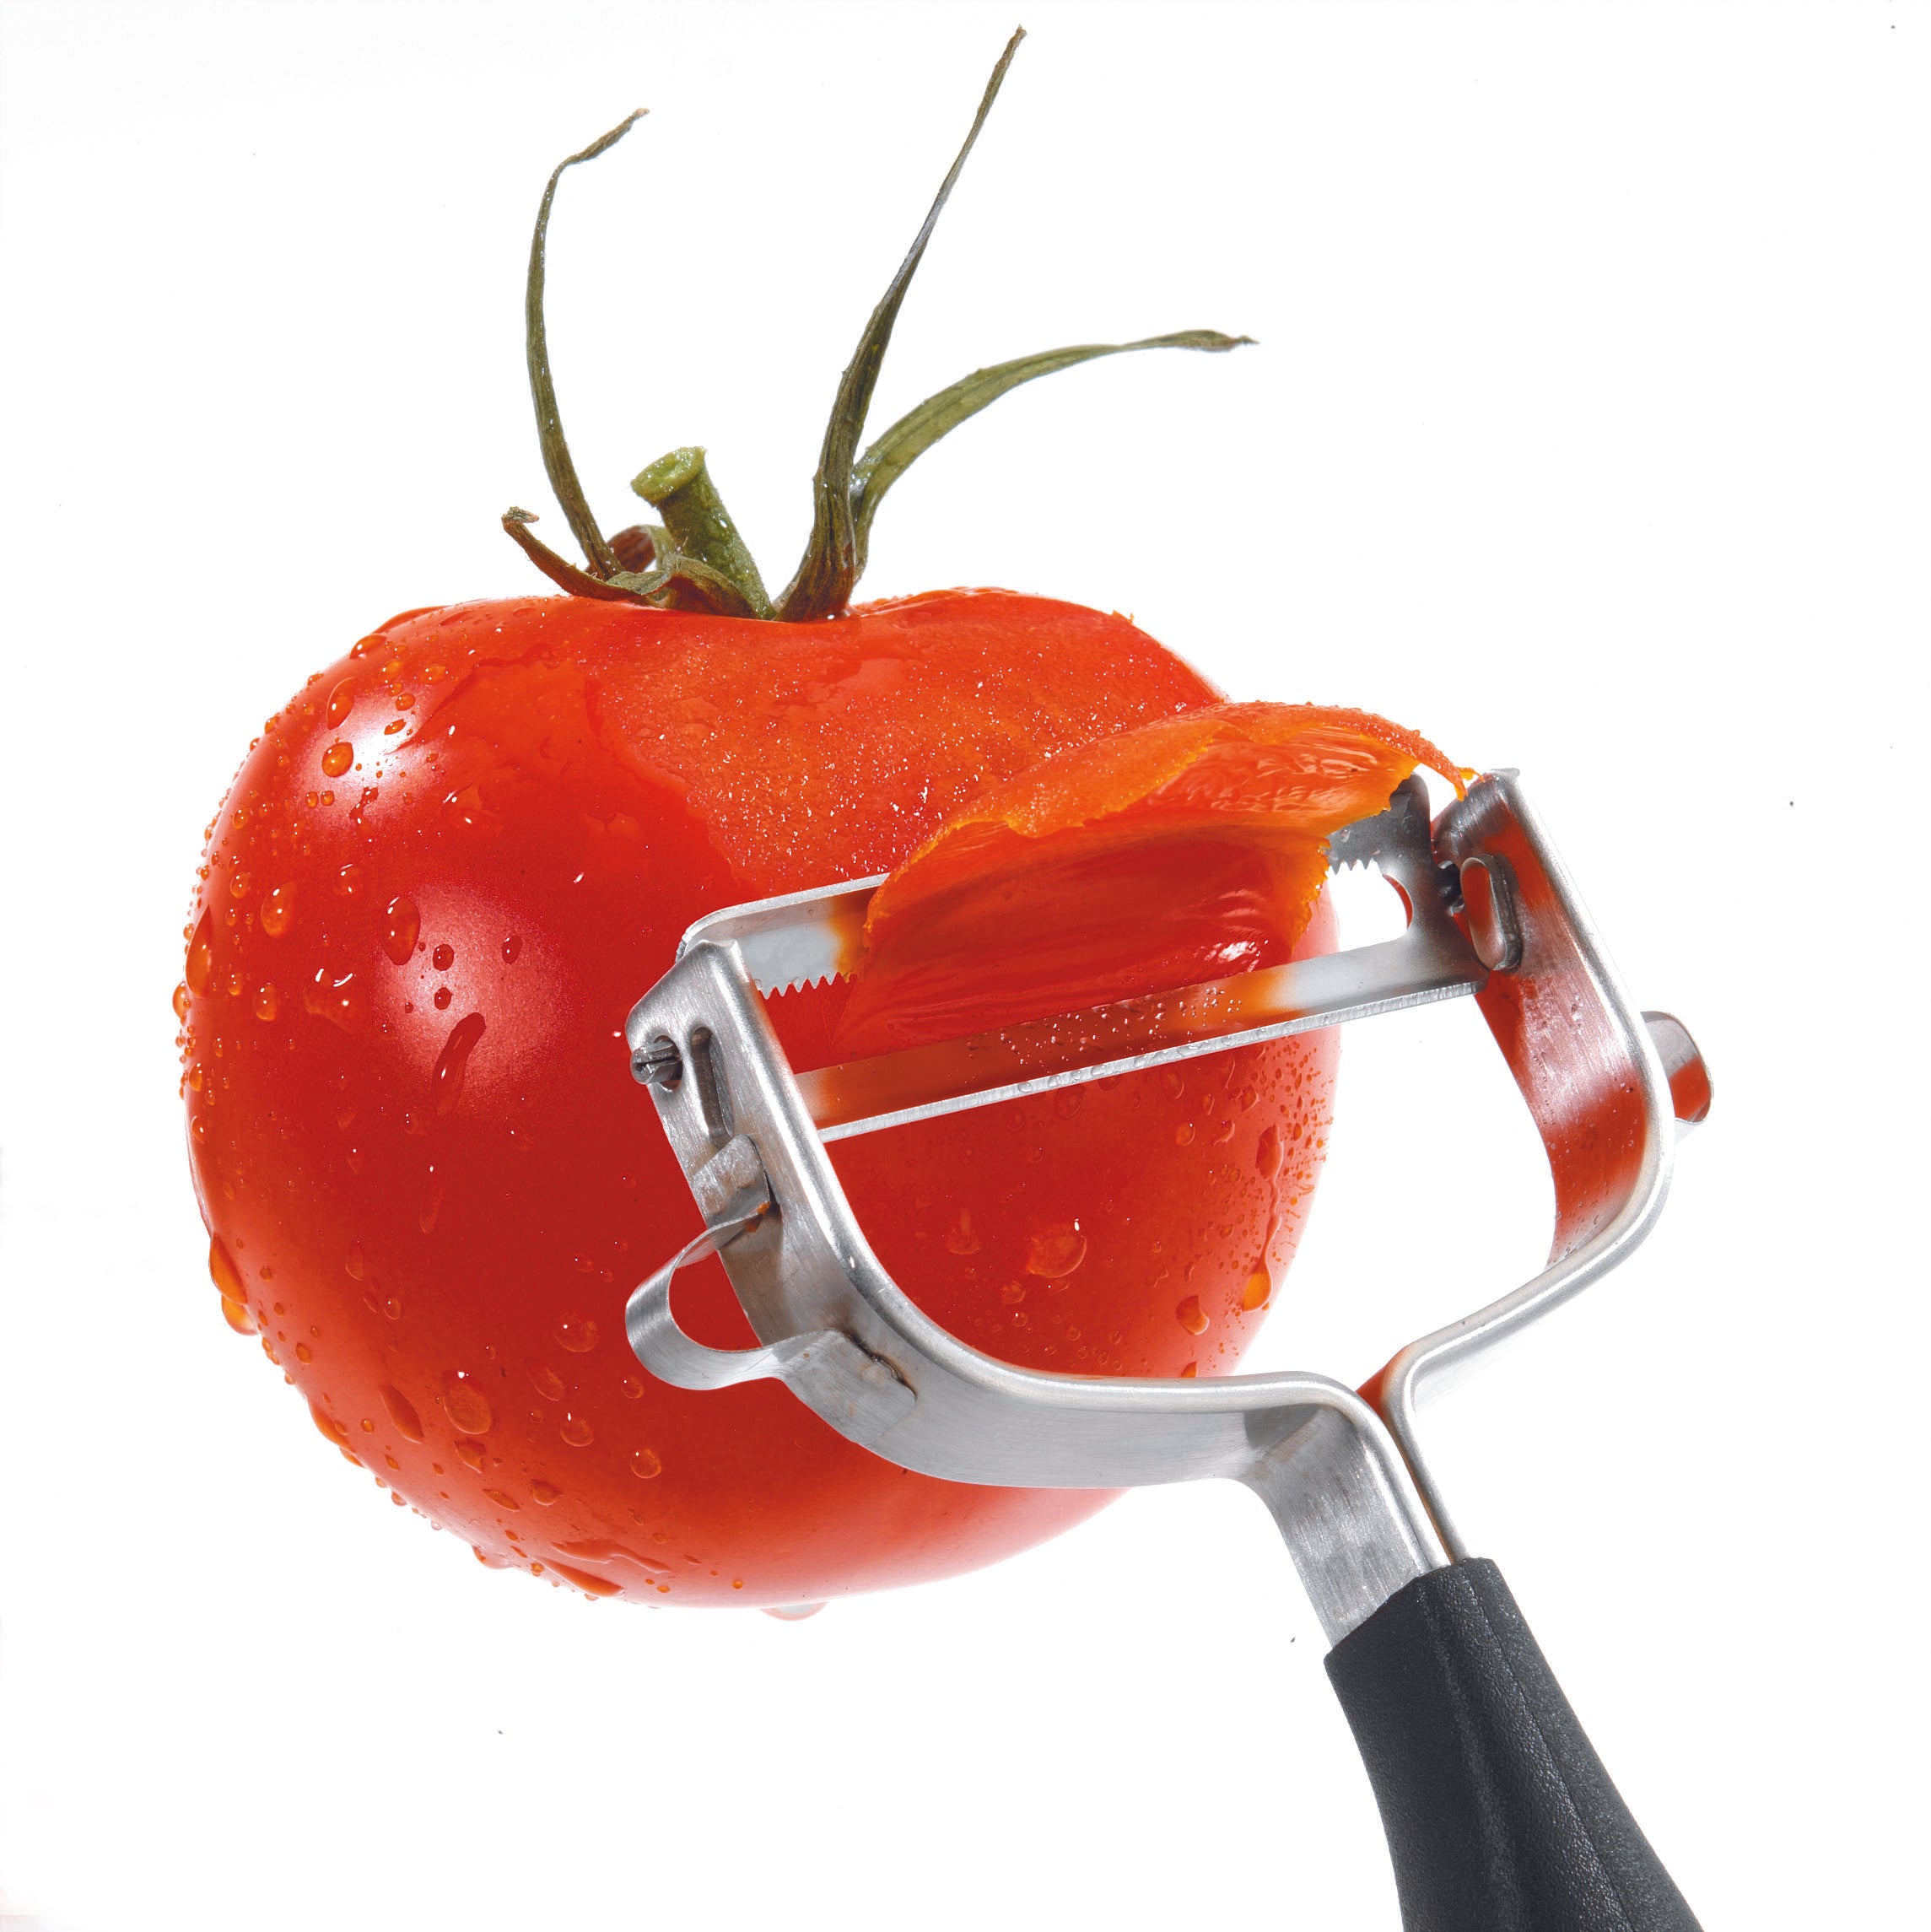 Buy Tomato/Kiwi Peeler - online at RÖSLE GmbH & Co. KG